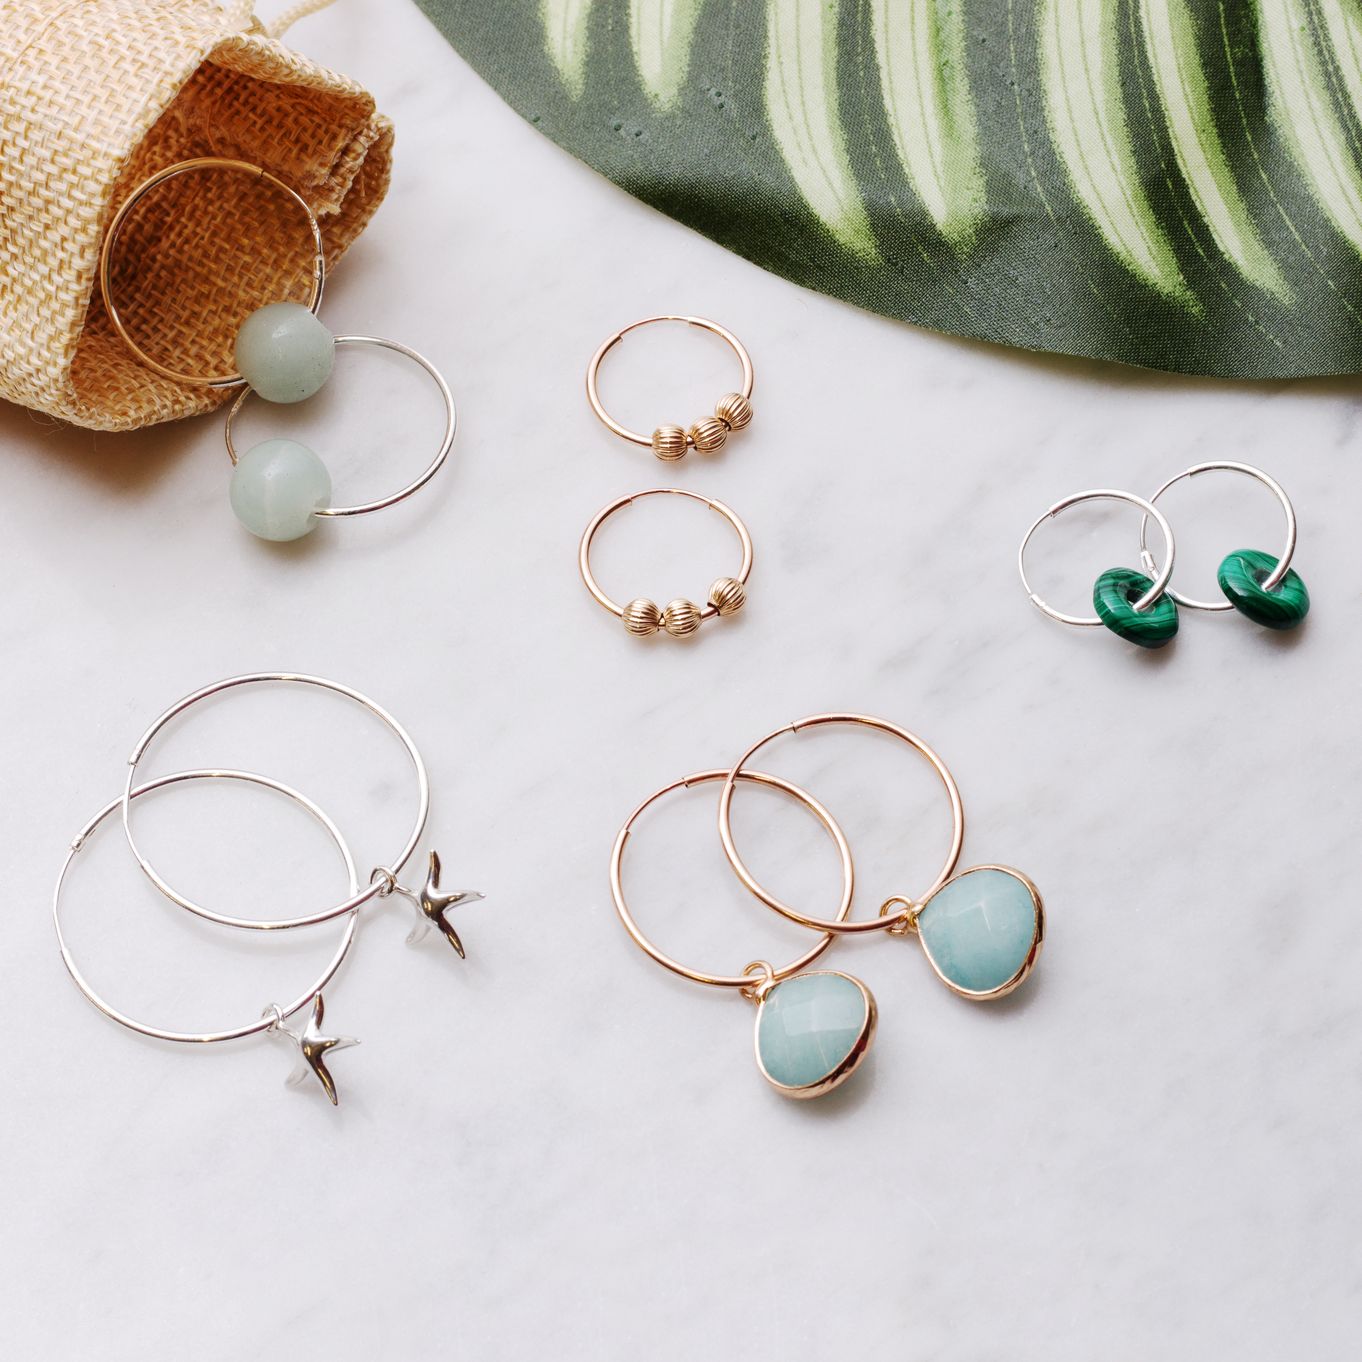 earring hoops for jewelry making